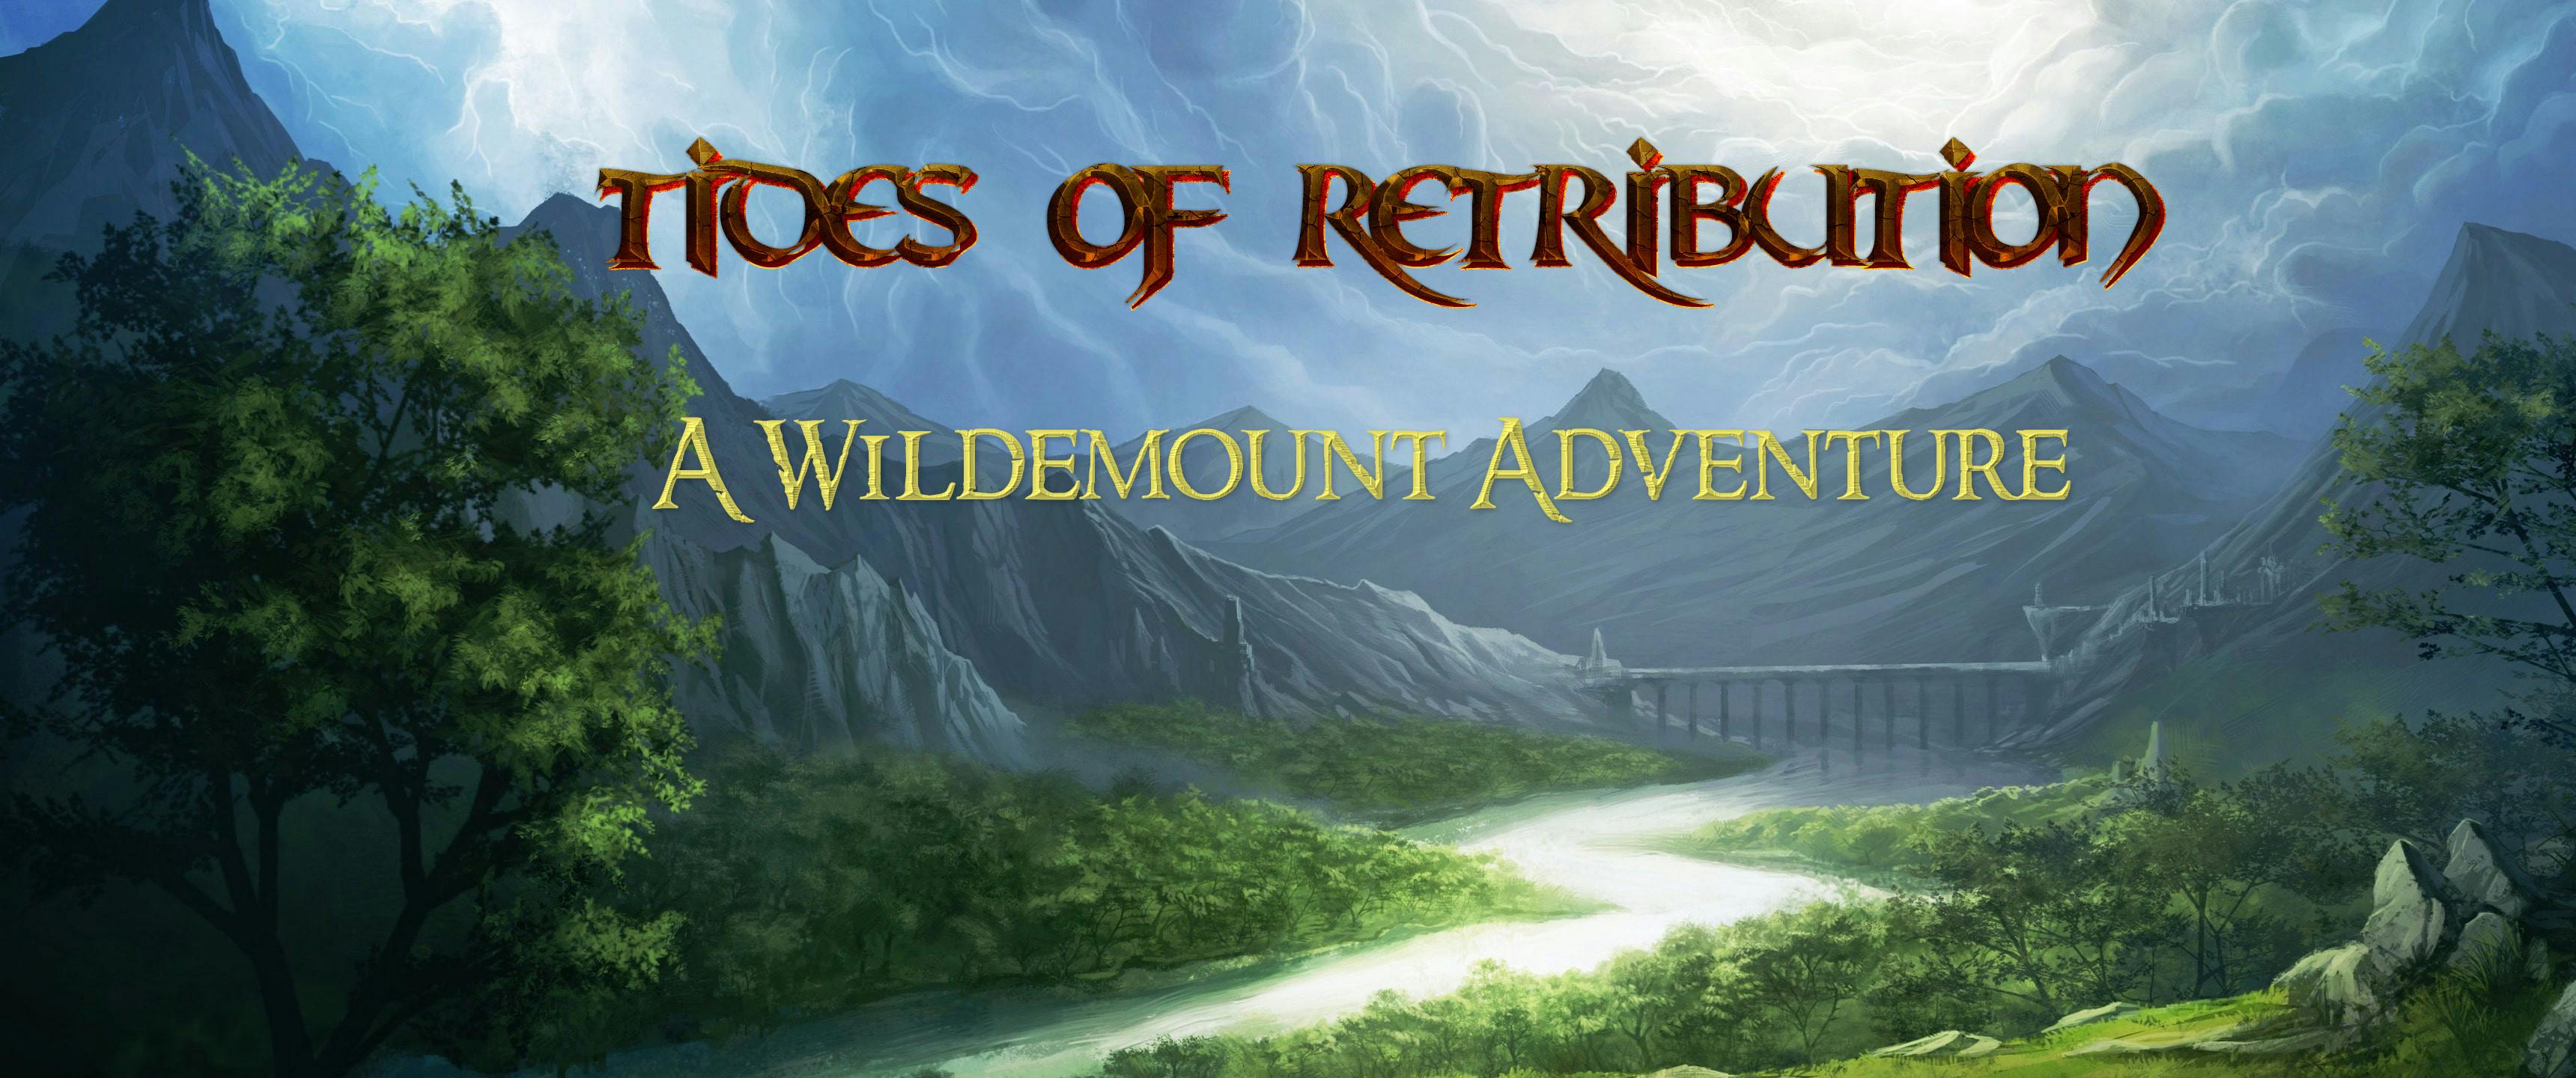 Tides of retribution -  A Wildemount Adventure  LGBTQ+ friendly